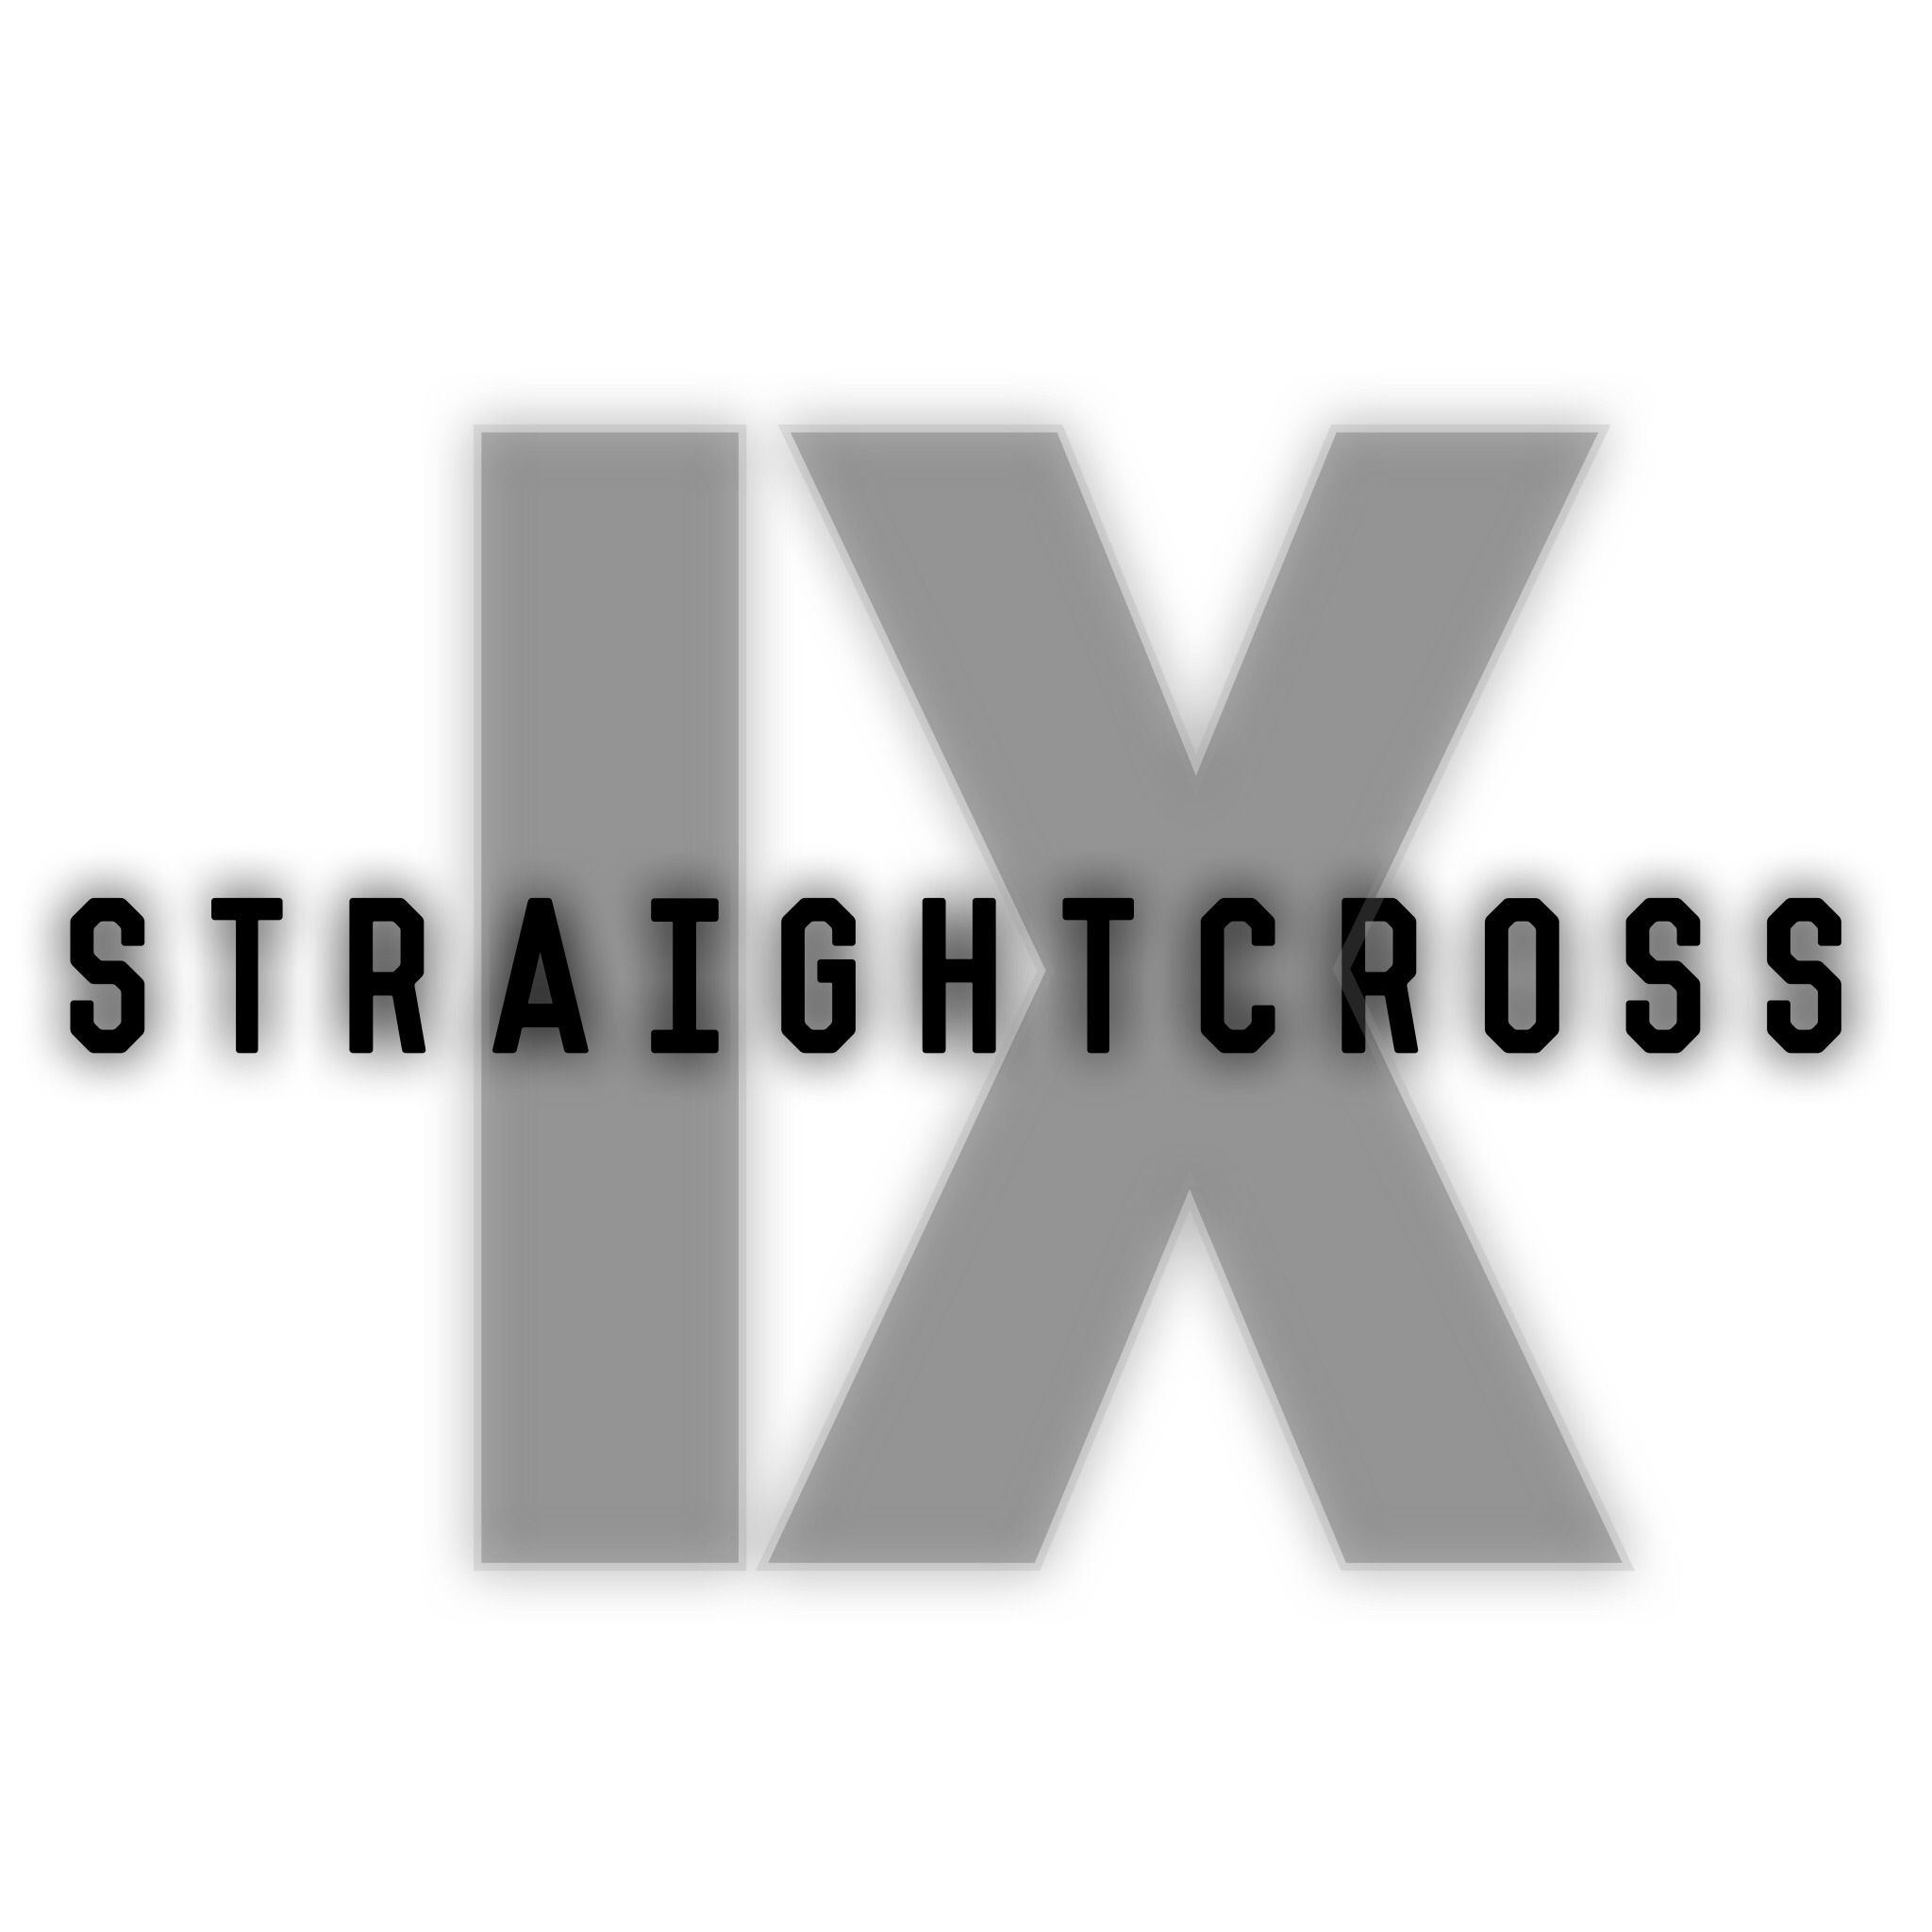 Straightcross